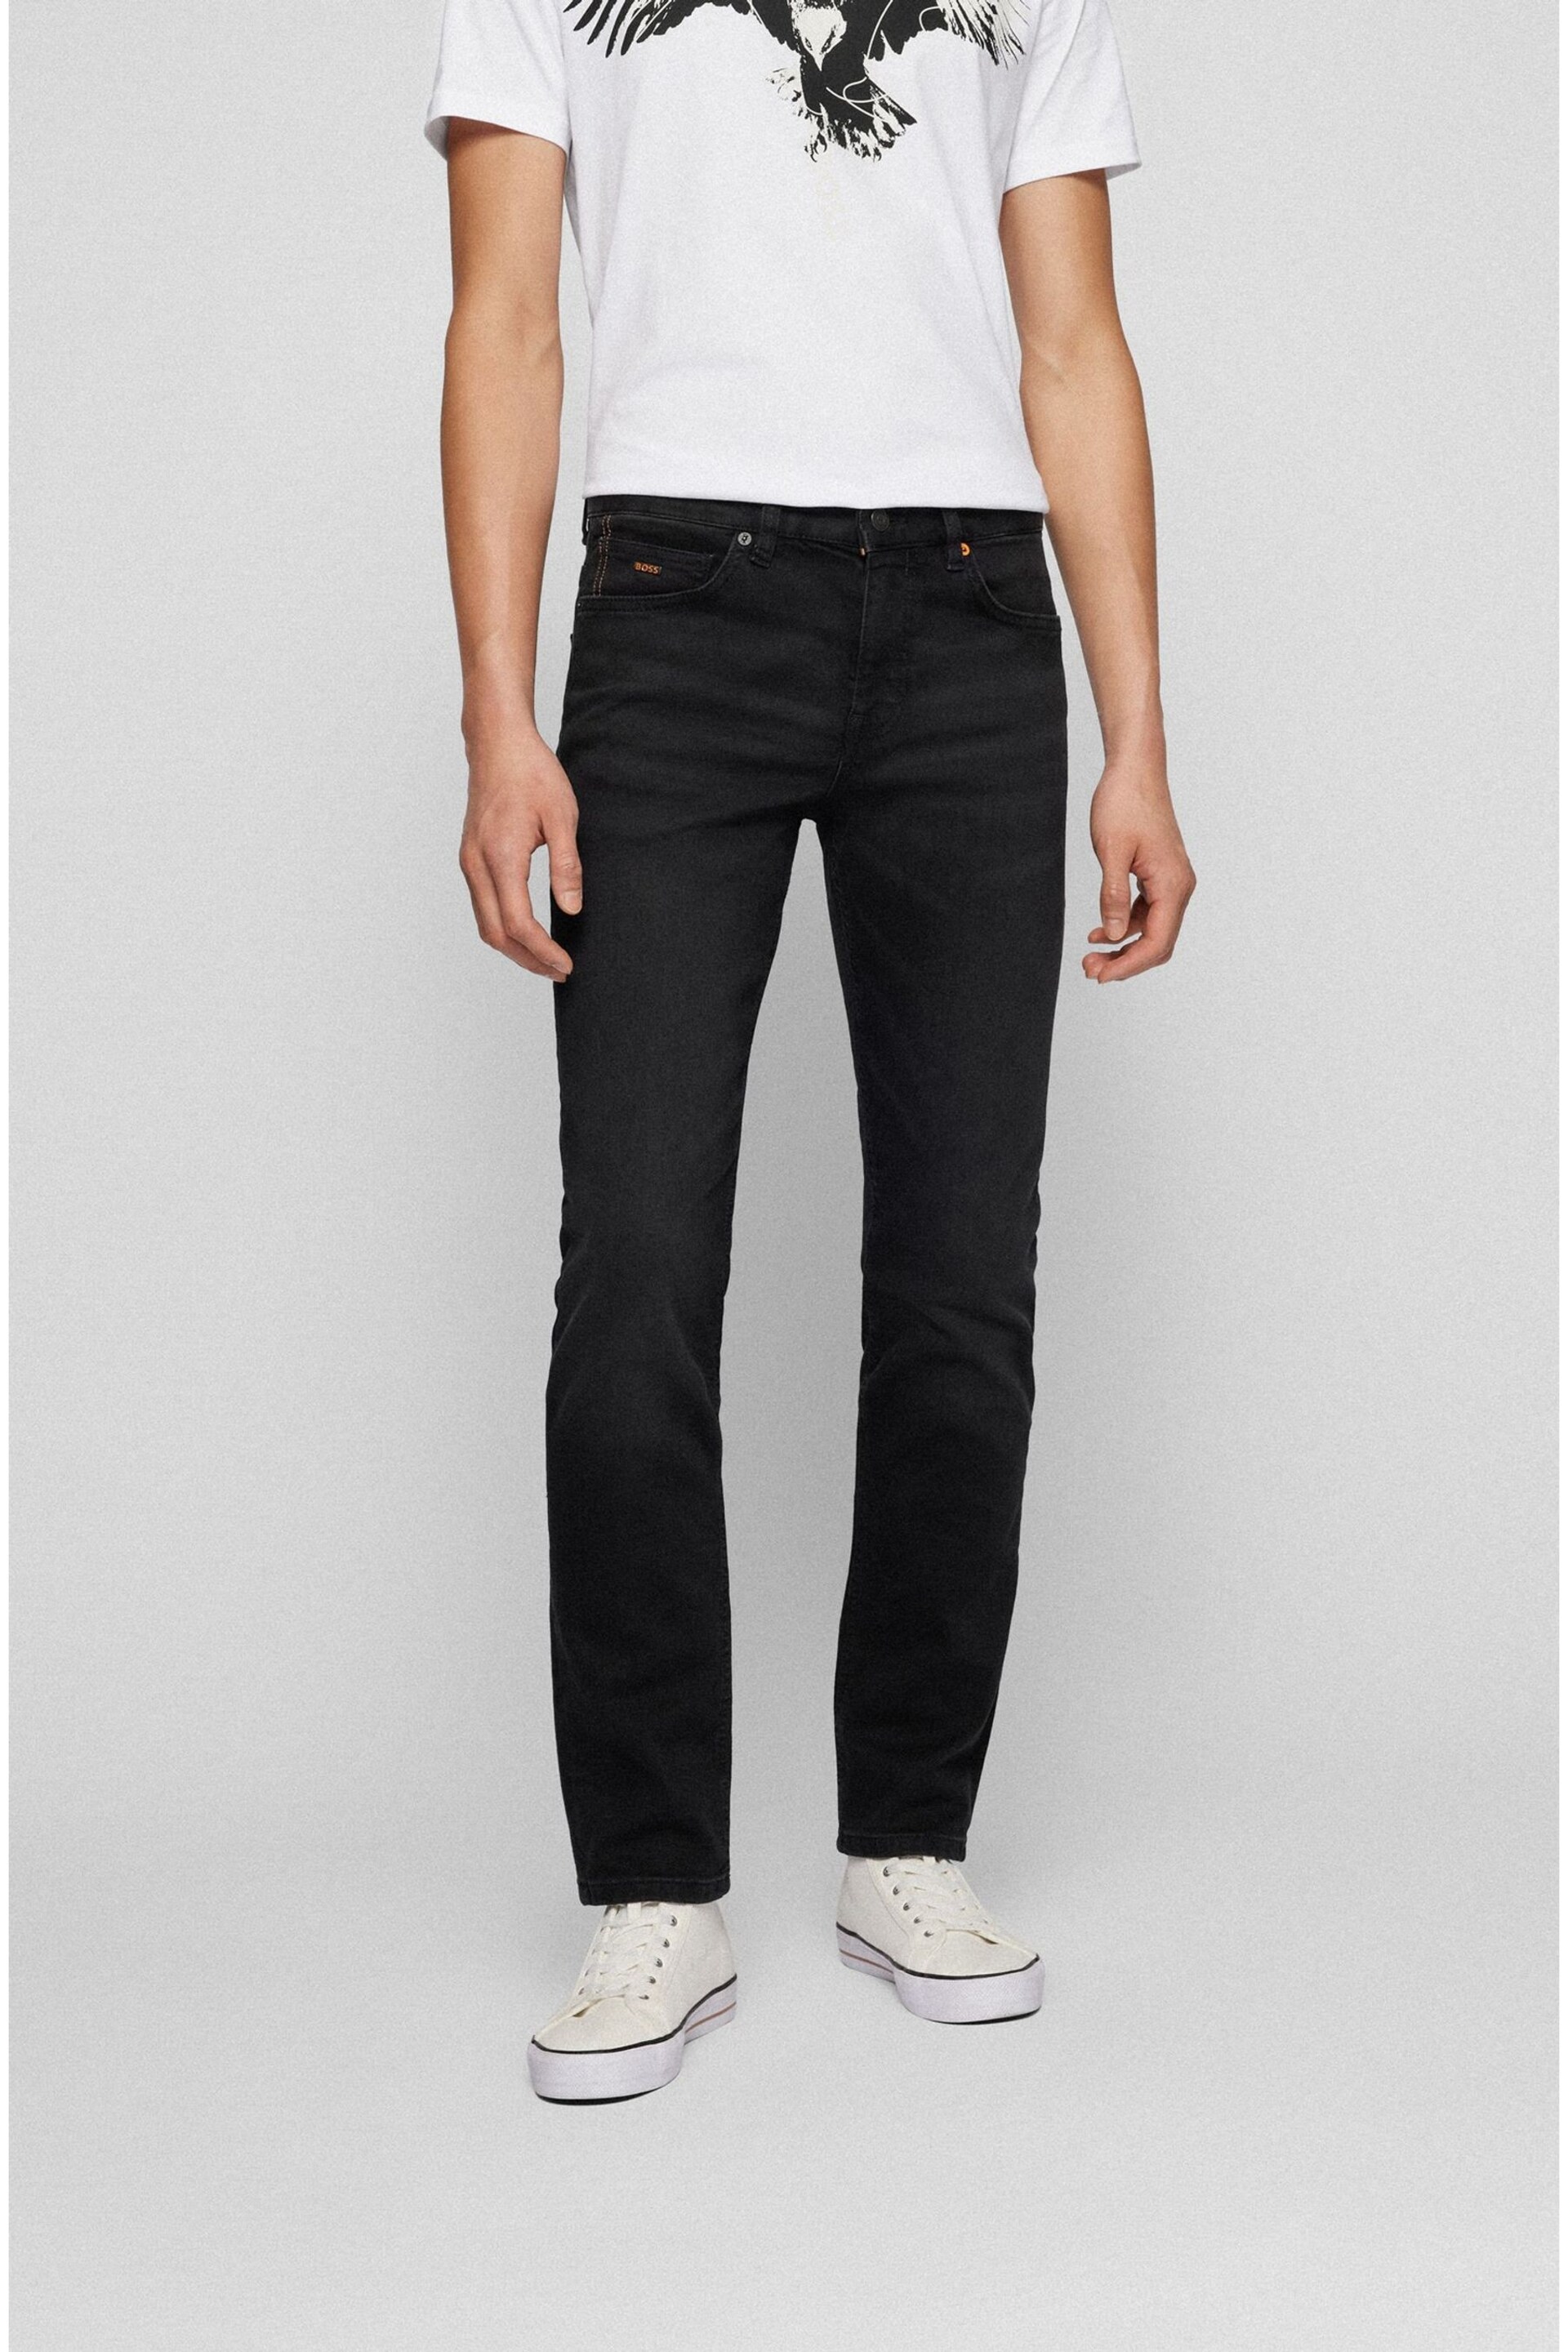 BOSS Black Wash Slim Fit Comfort Stretch Denim Jeans - Image 1 of 5